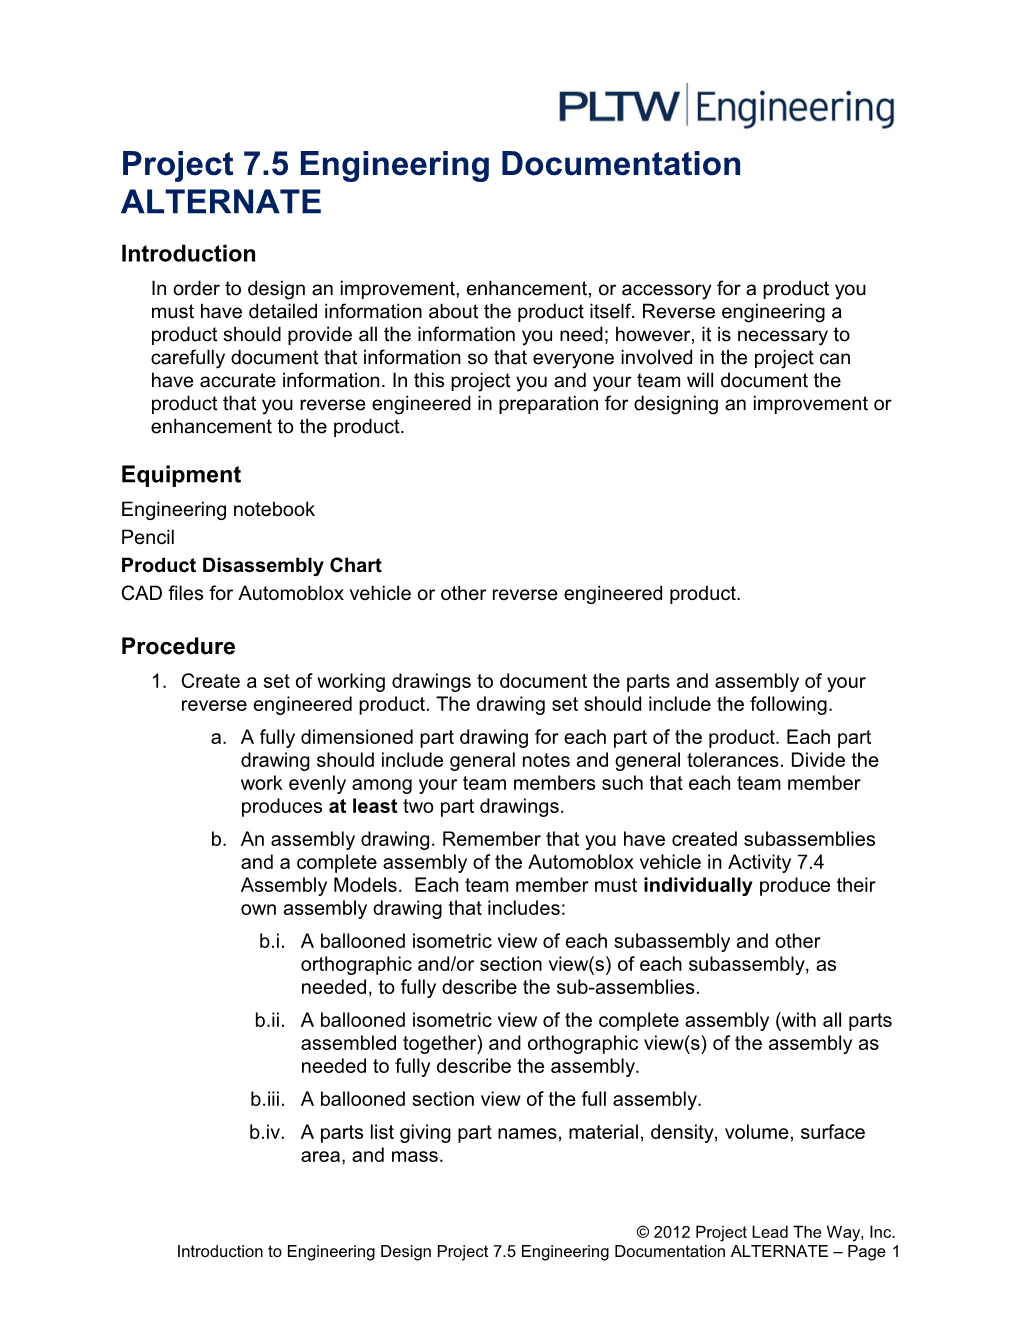 Project 7.5 Engineering Documenation ALTERNATE